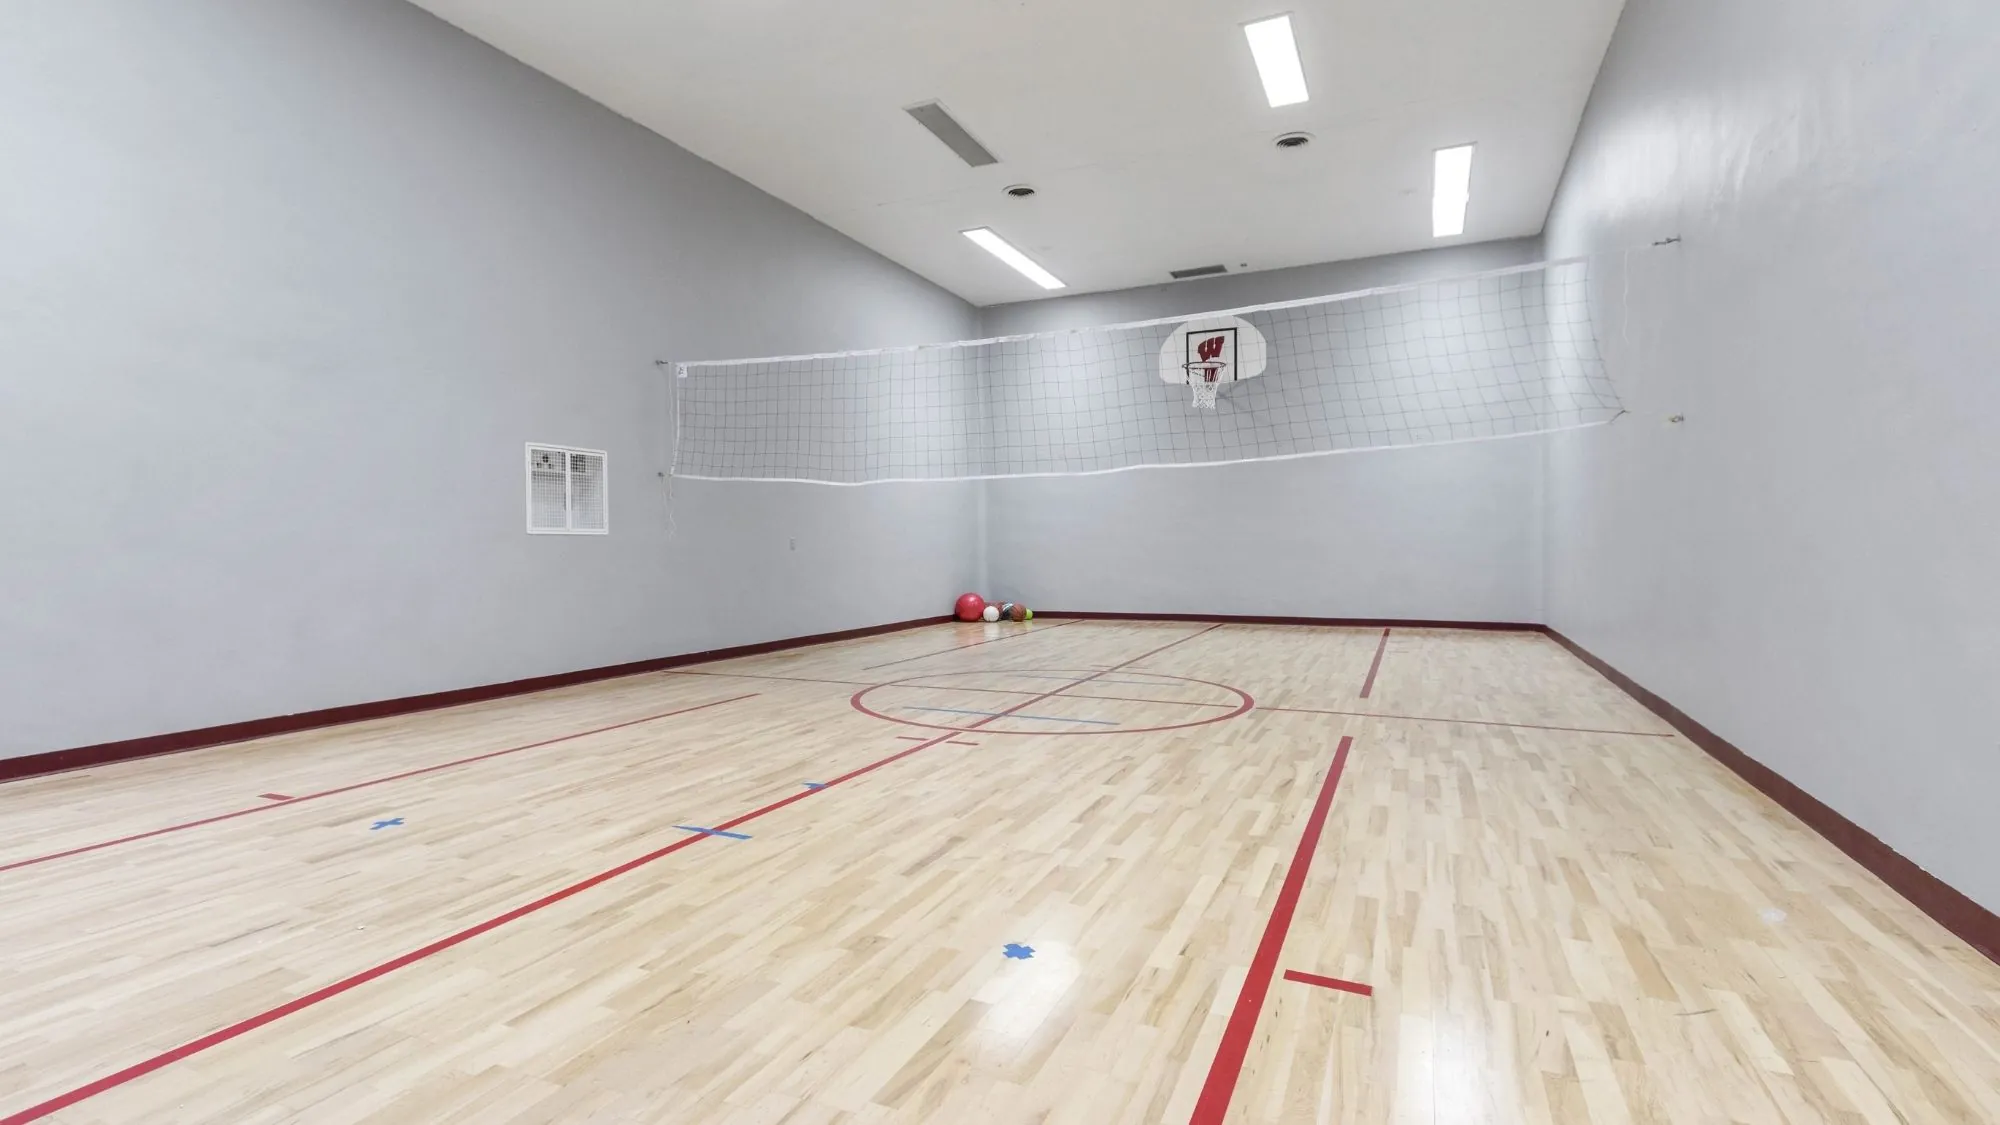 Preble Hills Basketball Court